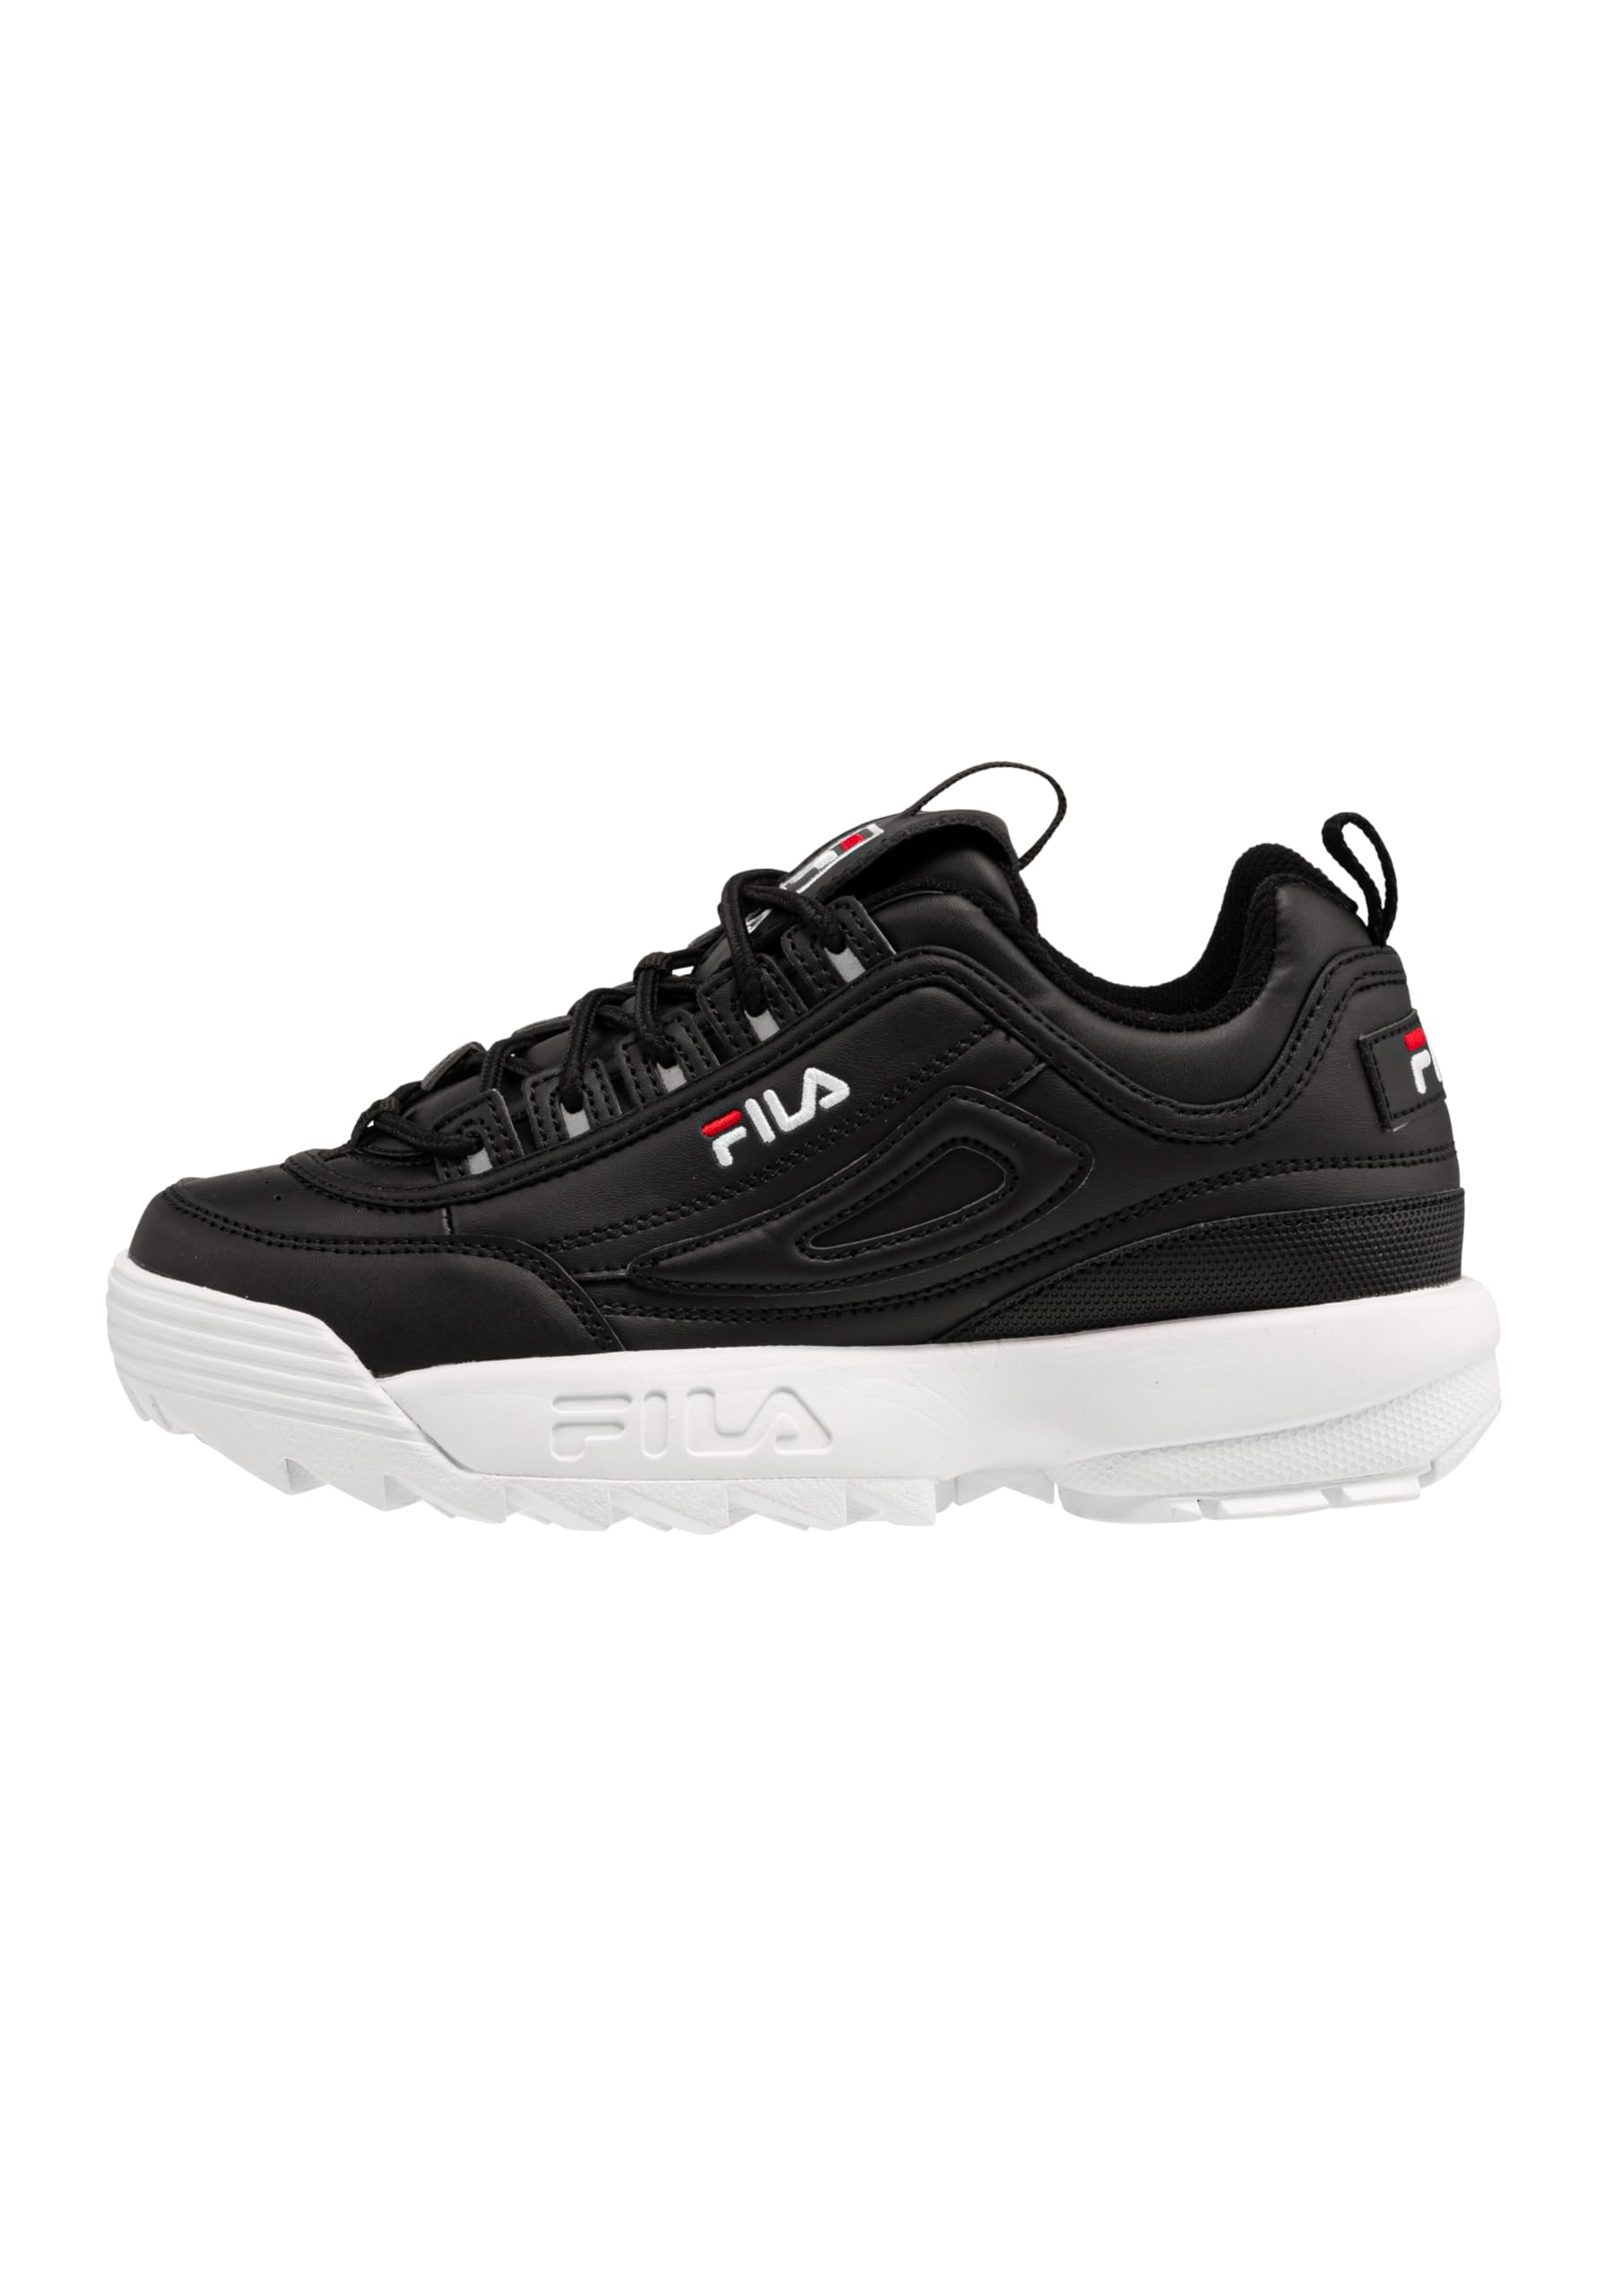 FILA Damen Disruptor wmn Sneaker, Black, 41 EU